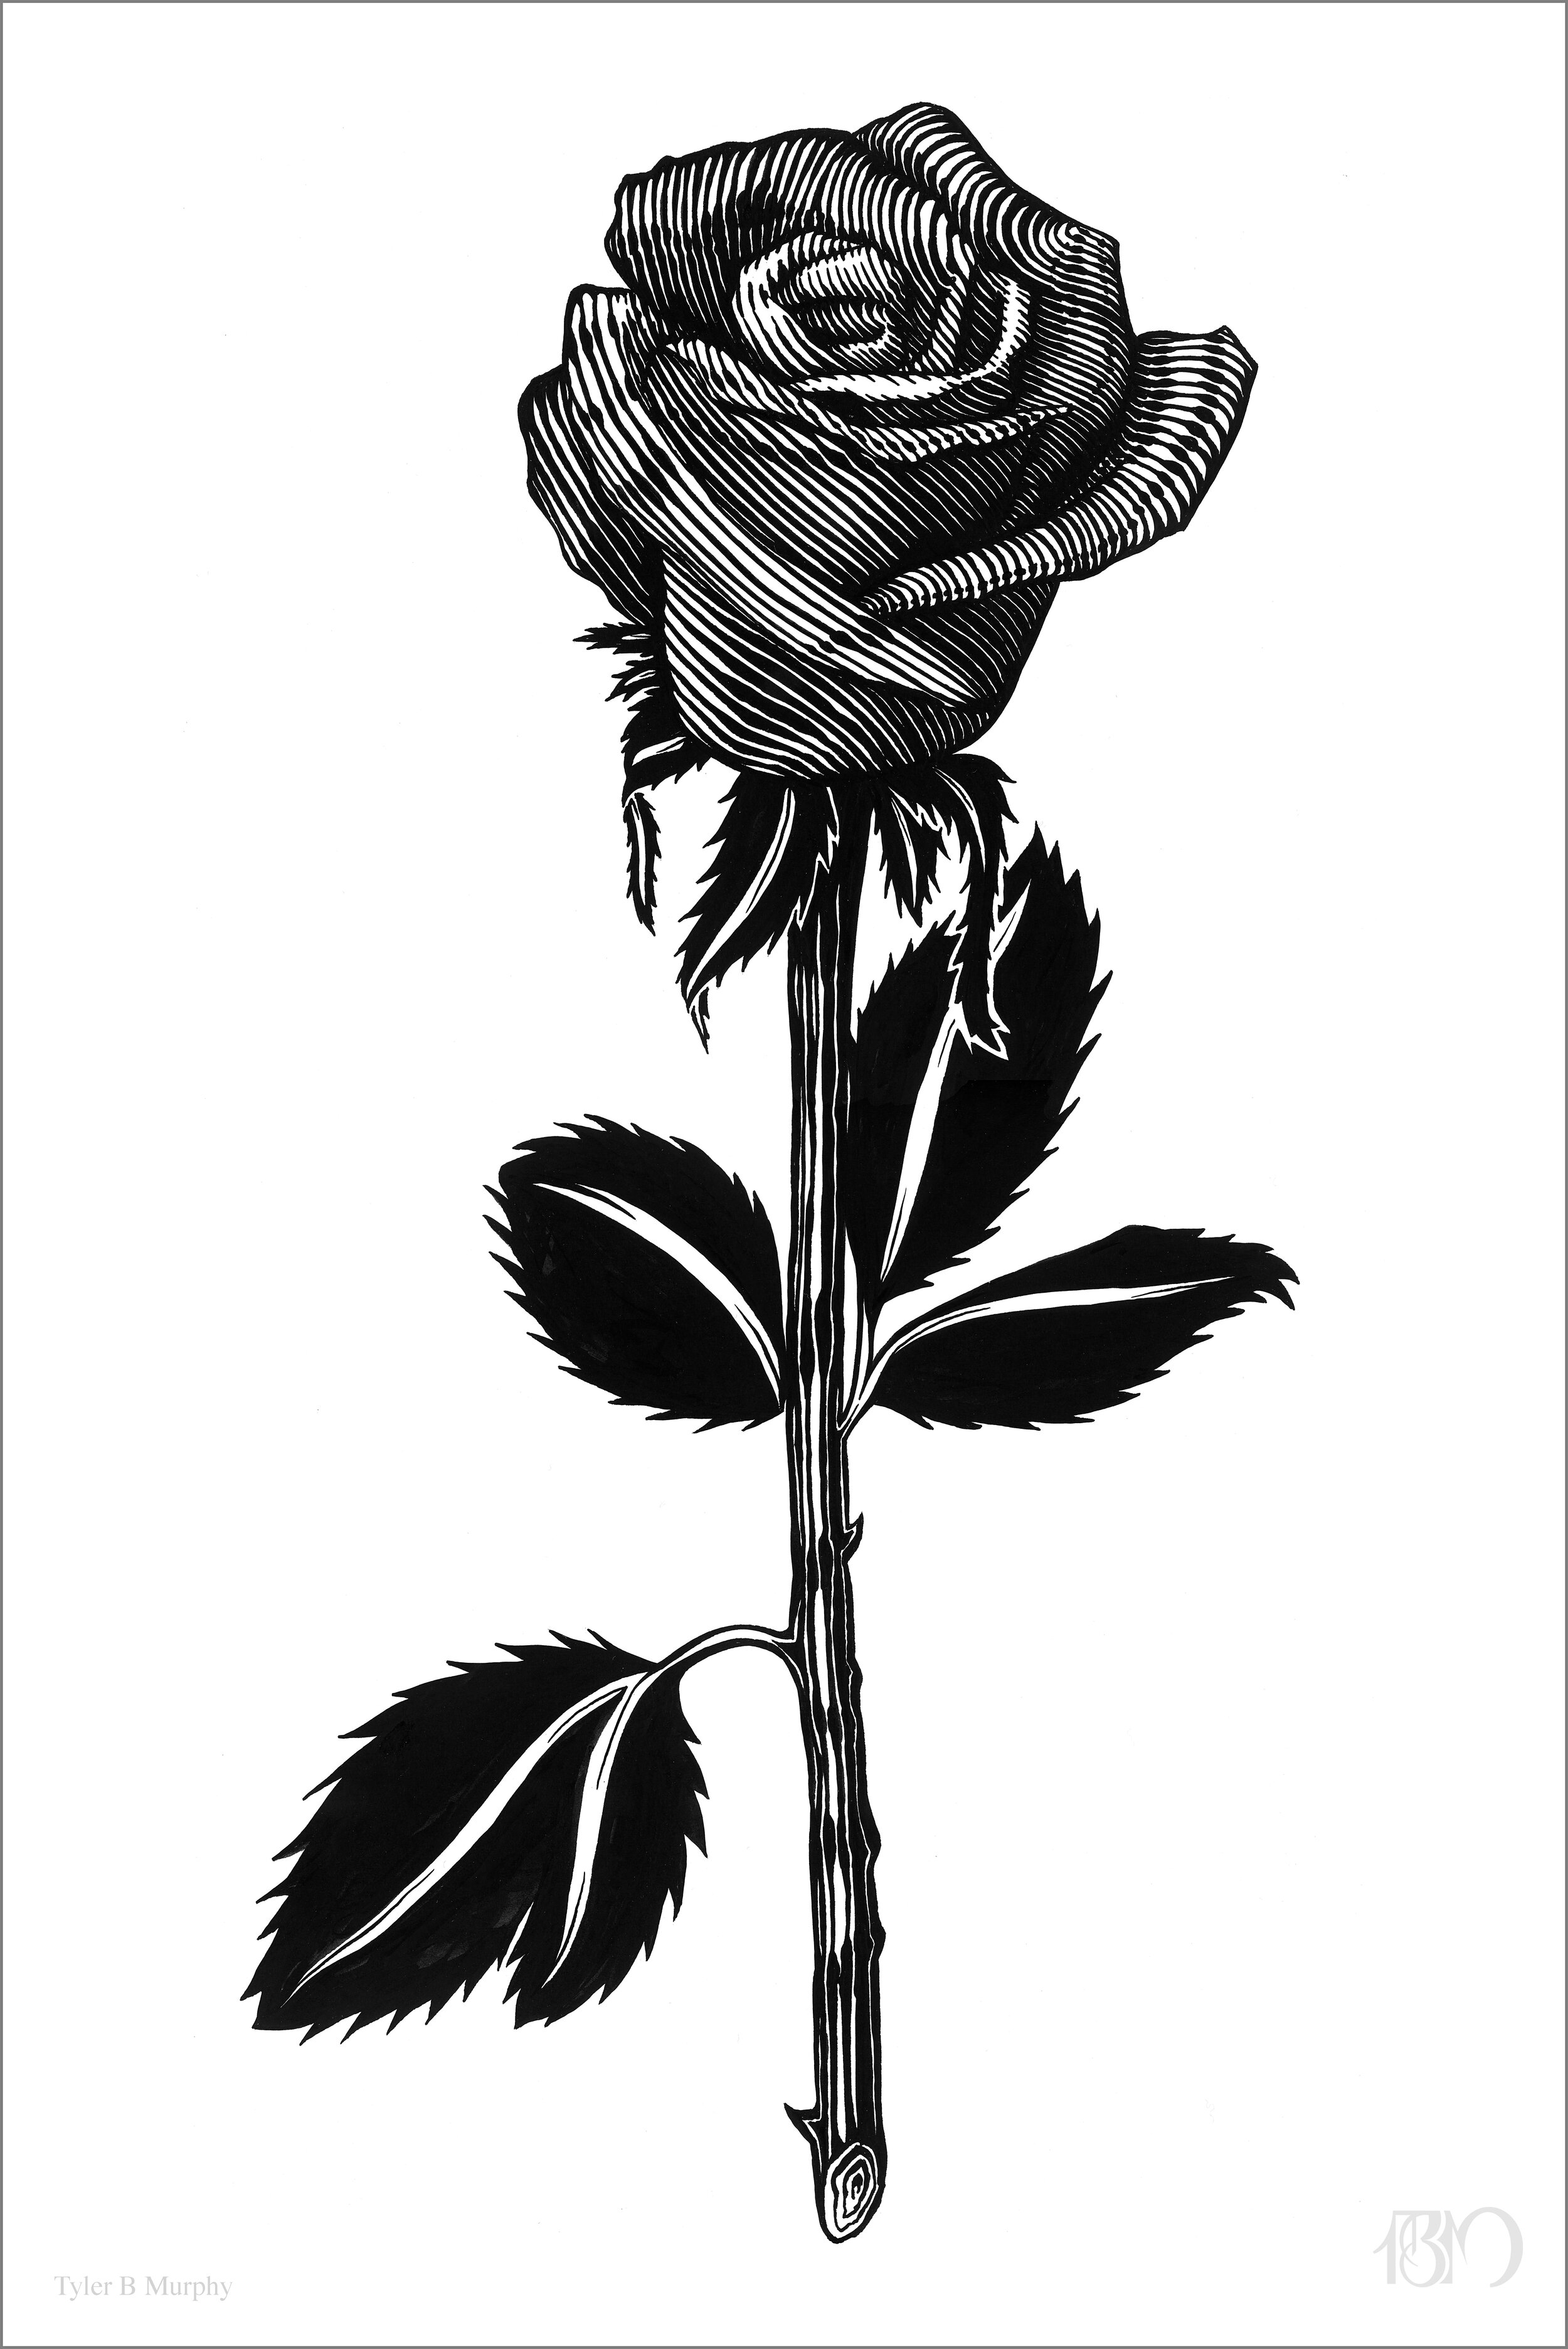 15 -Dark rose illustration Tyler B Murphy copy.jpg